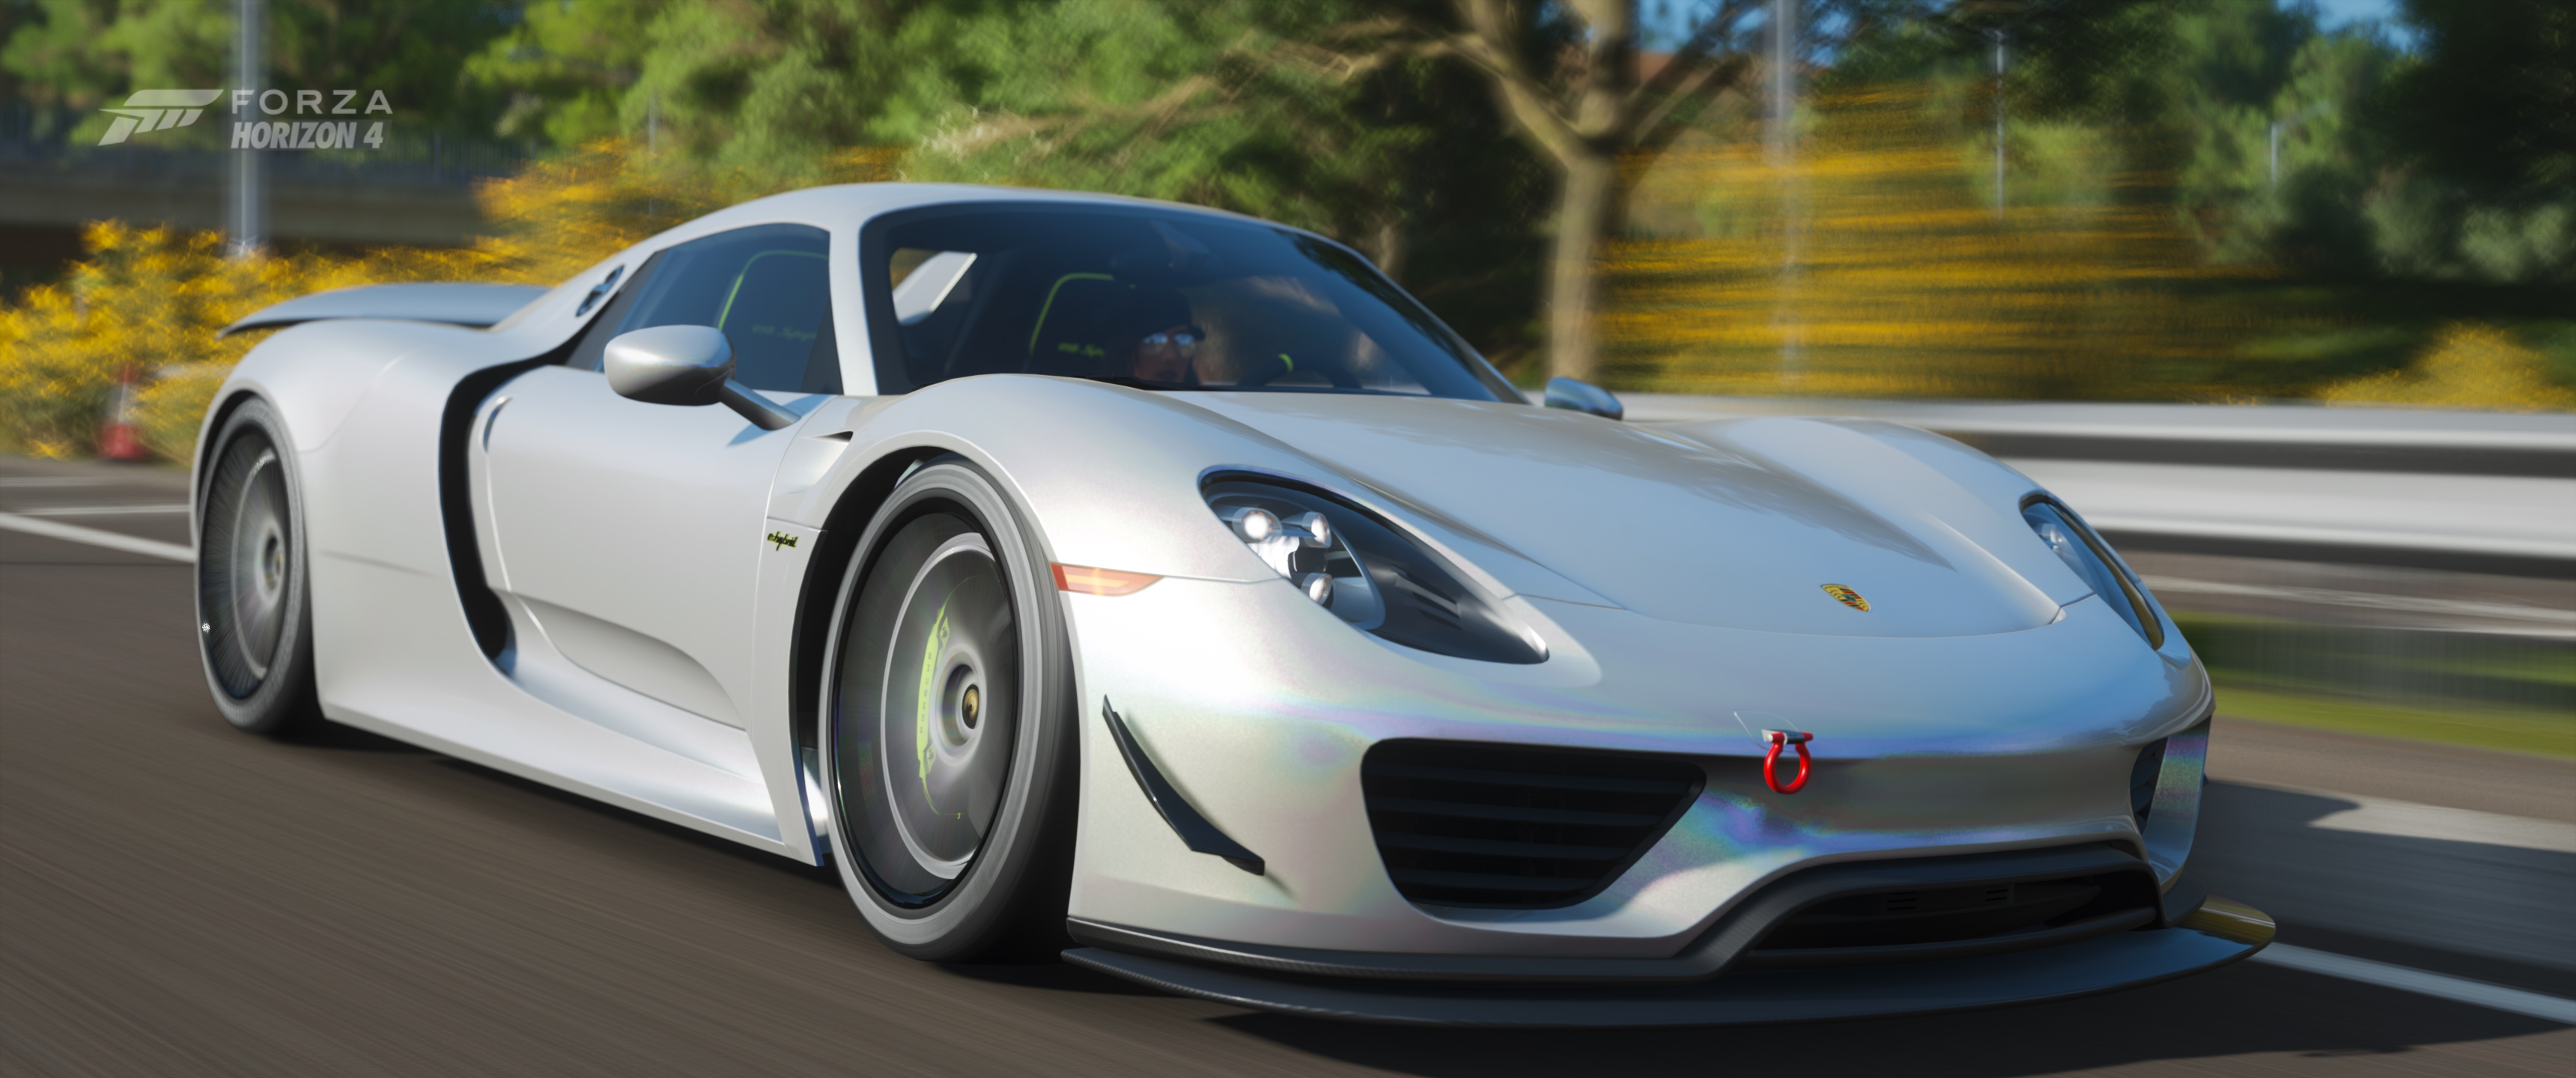 Porsche 918 Spyder Forza Forza Horizon 4 Racing Video Games Ultrawide Gaming Ultrawide Car 3440x1440